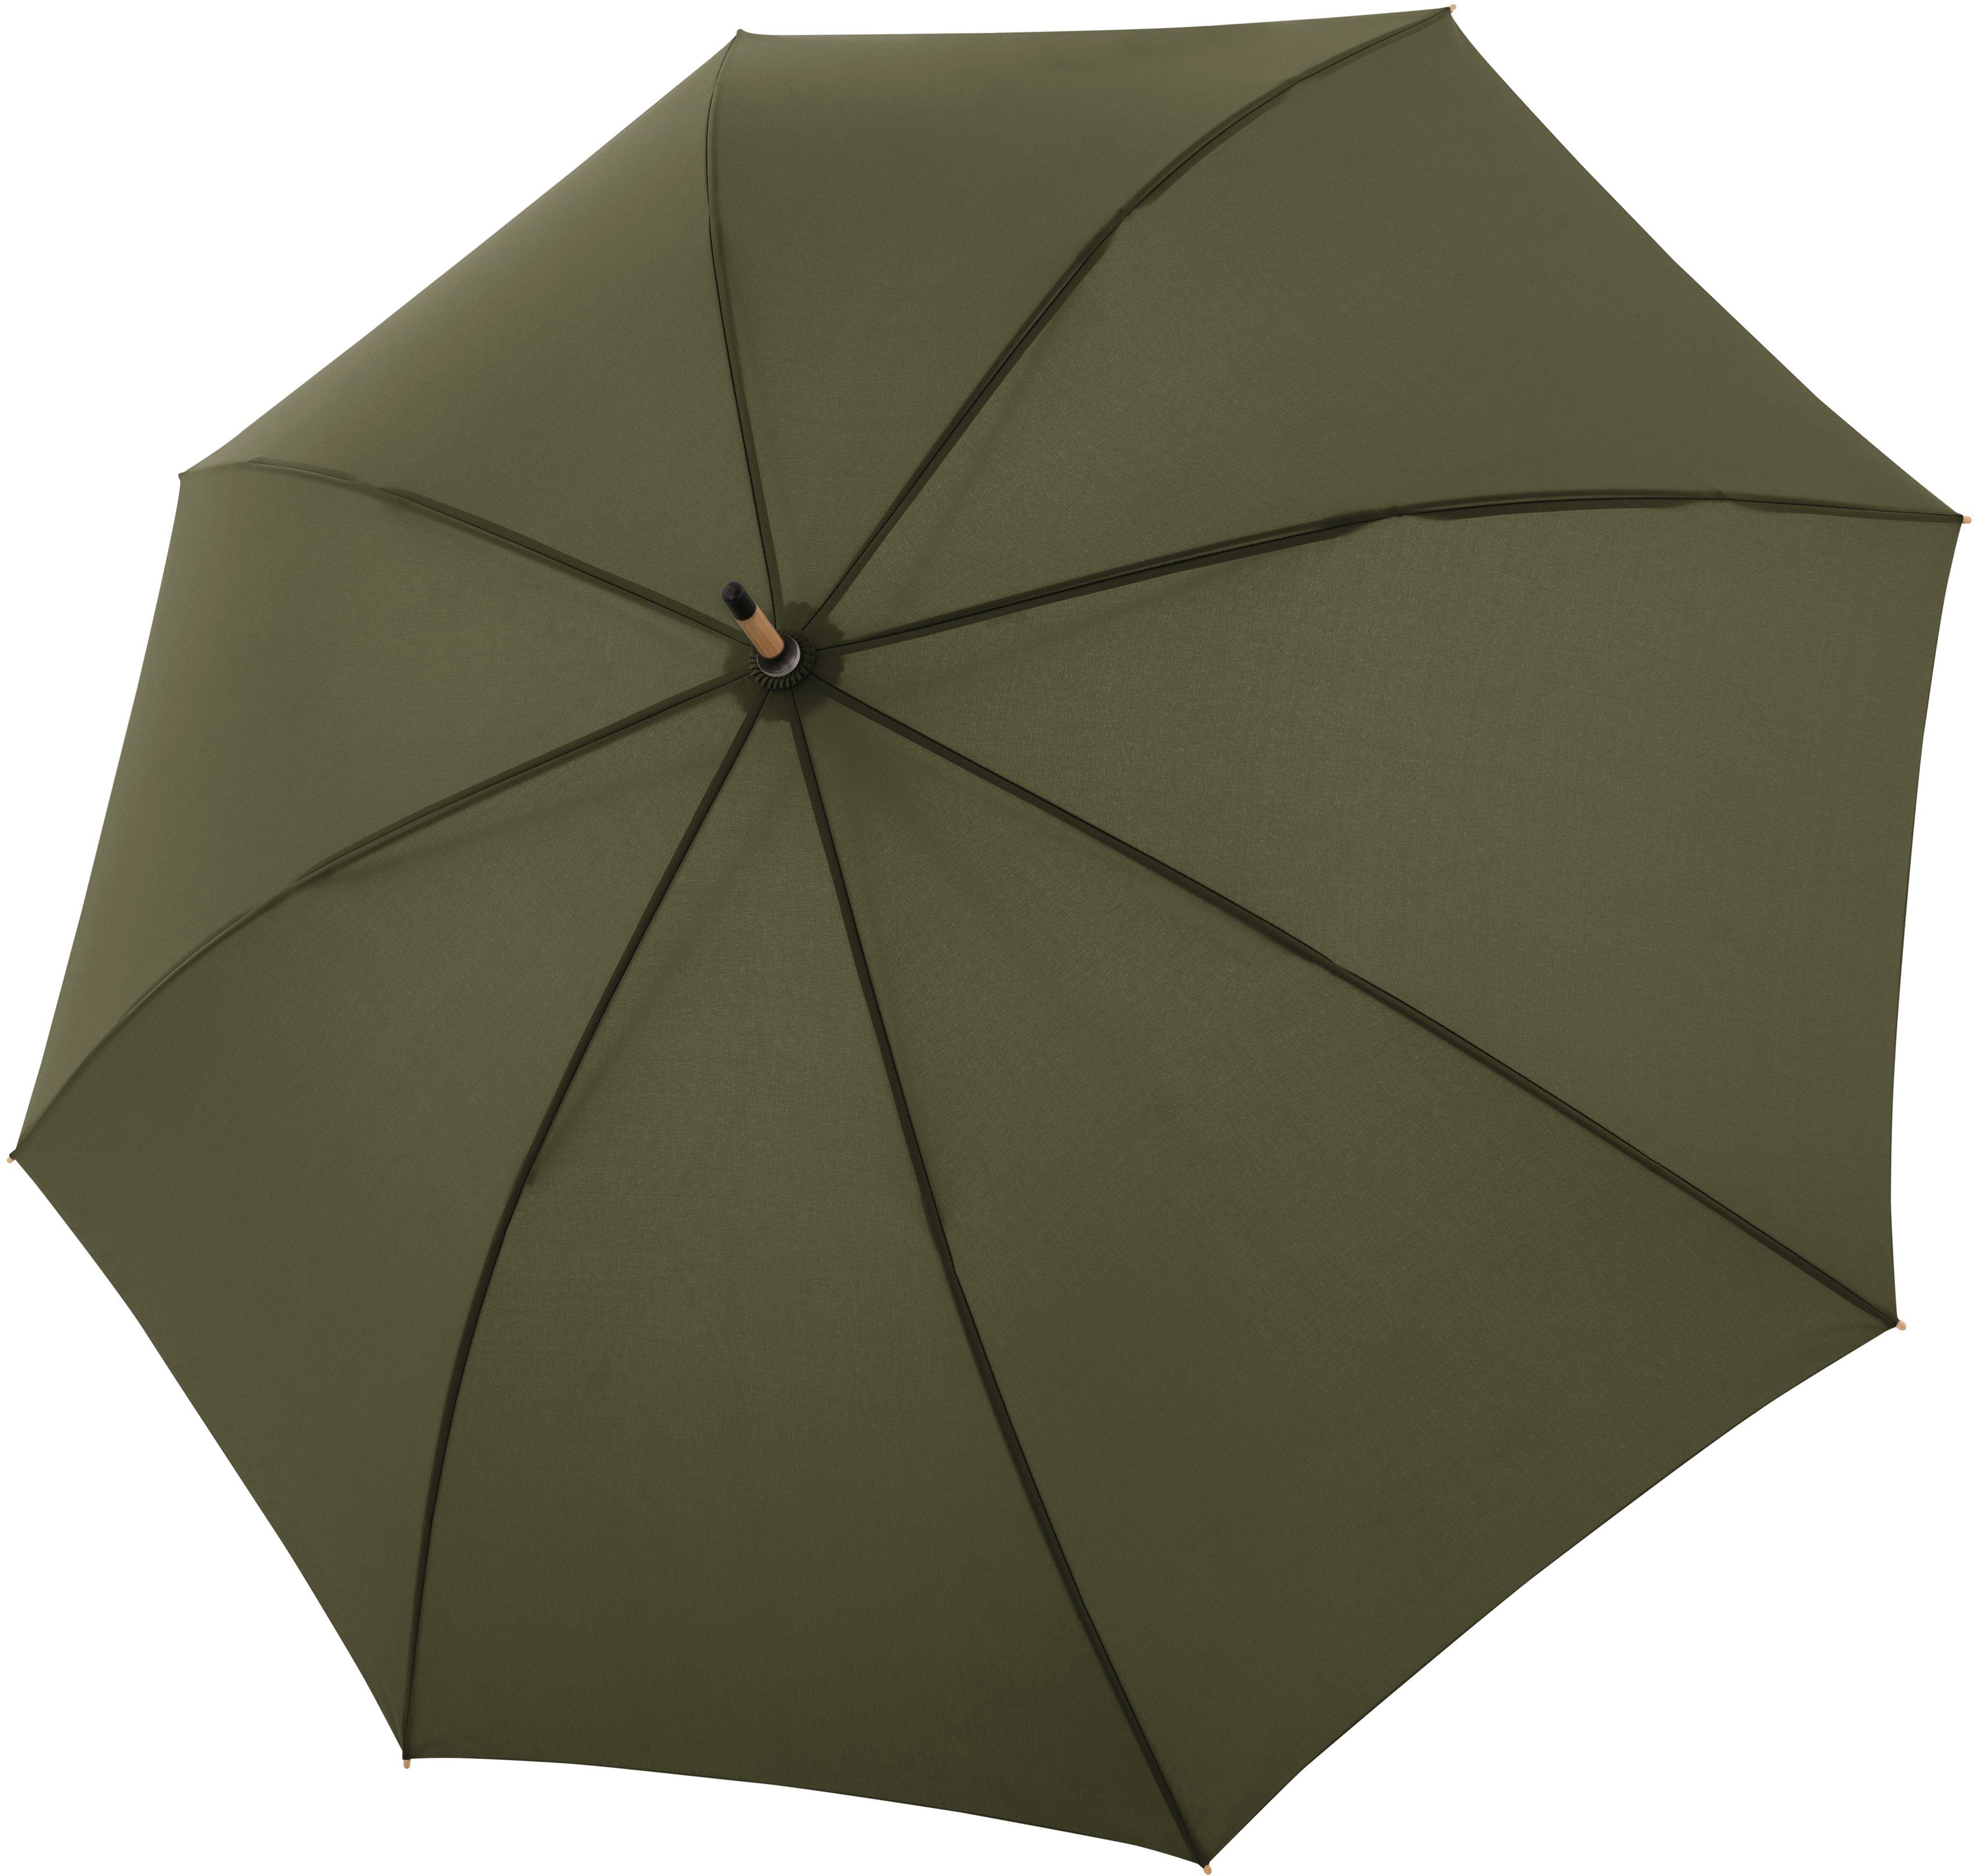 doppler® Stockregenschirm nature Long, deep olive, aus recyceltem Material mit Schirmgriff aus Holz